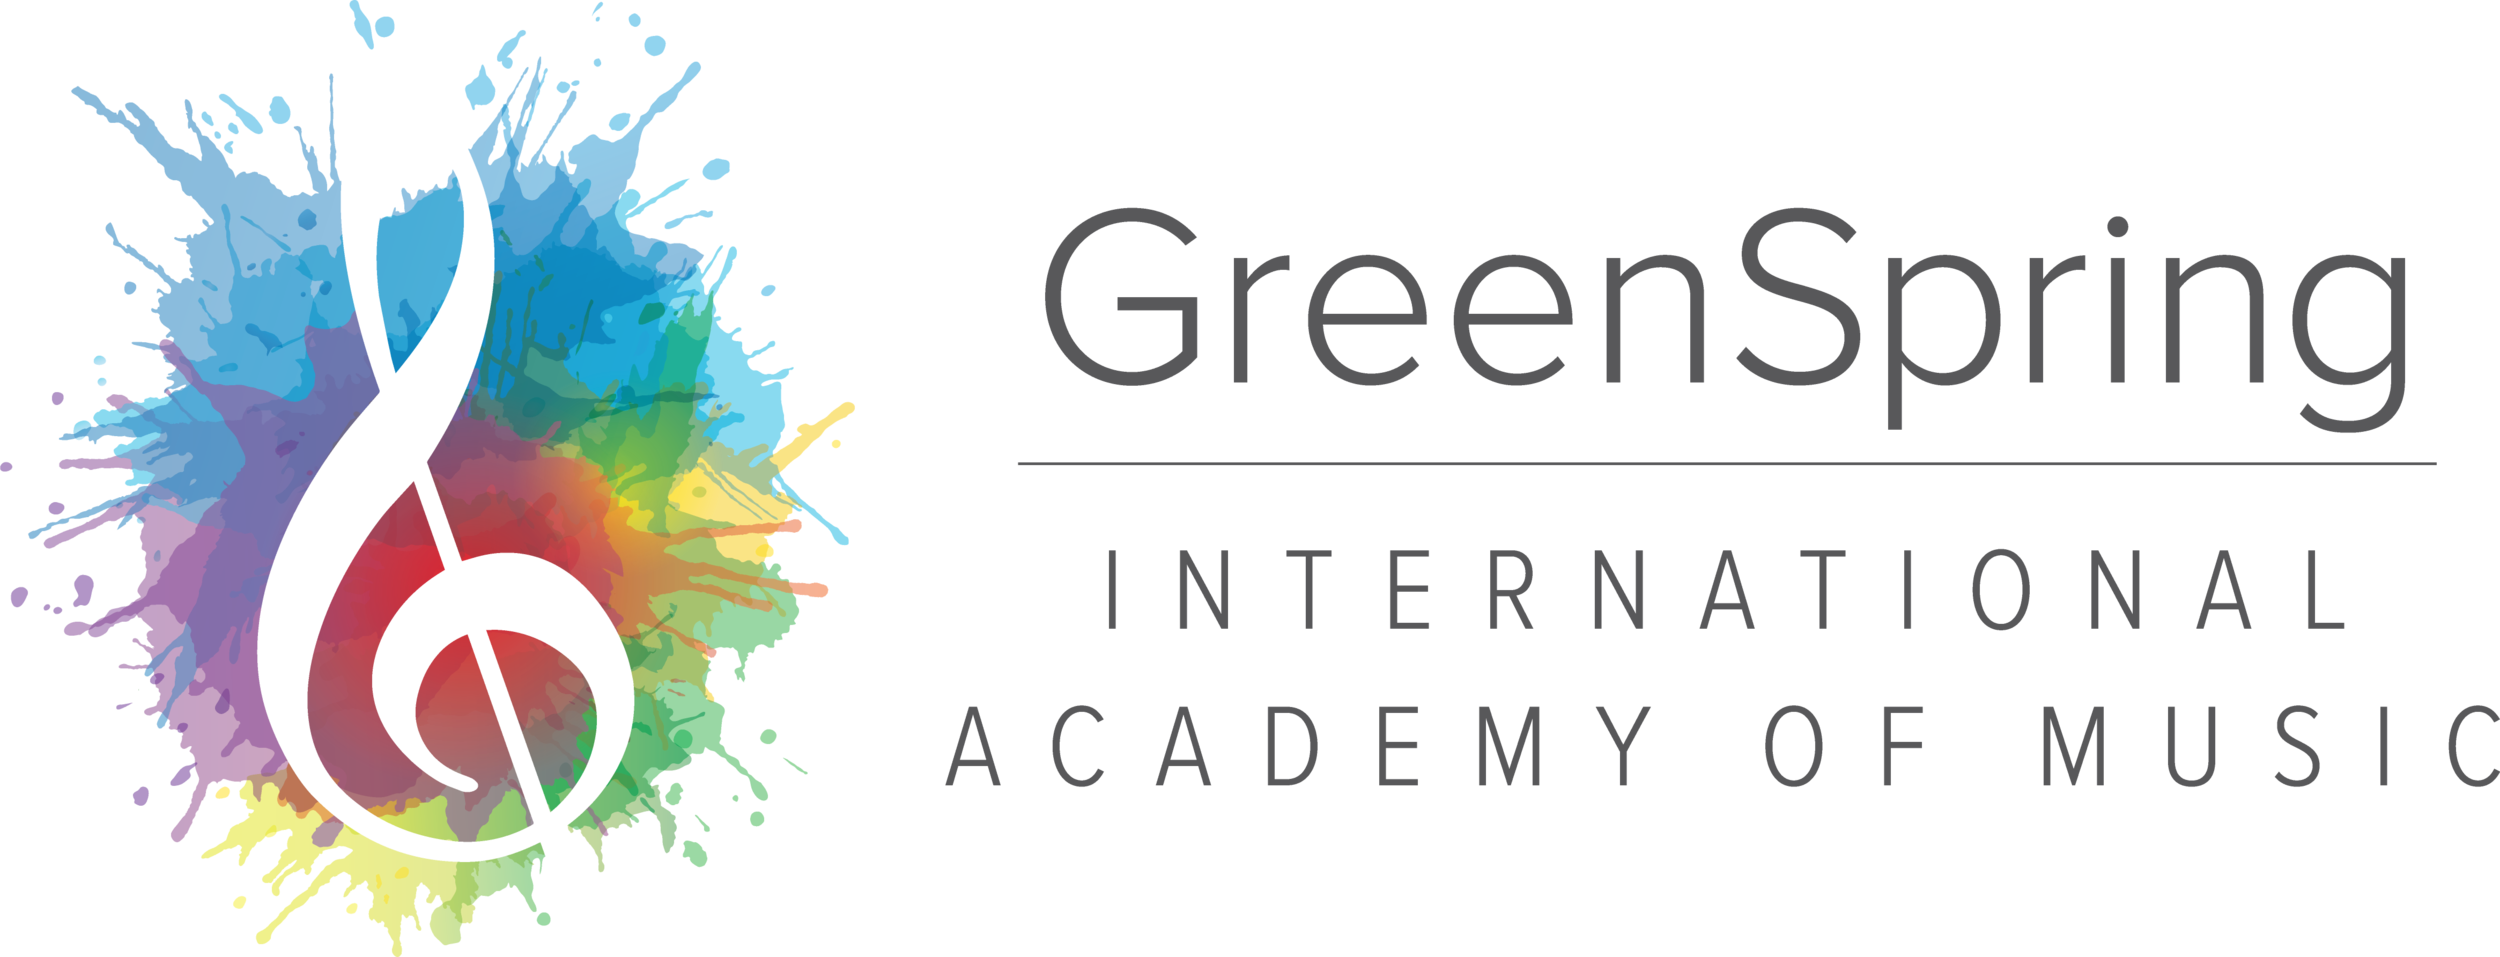 GreenSpring International Academy of Music